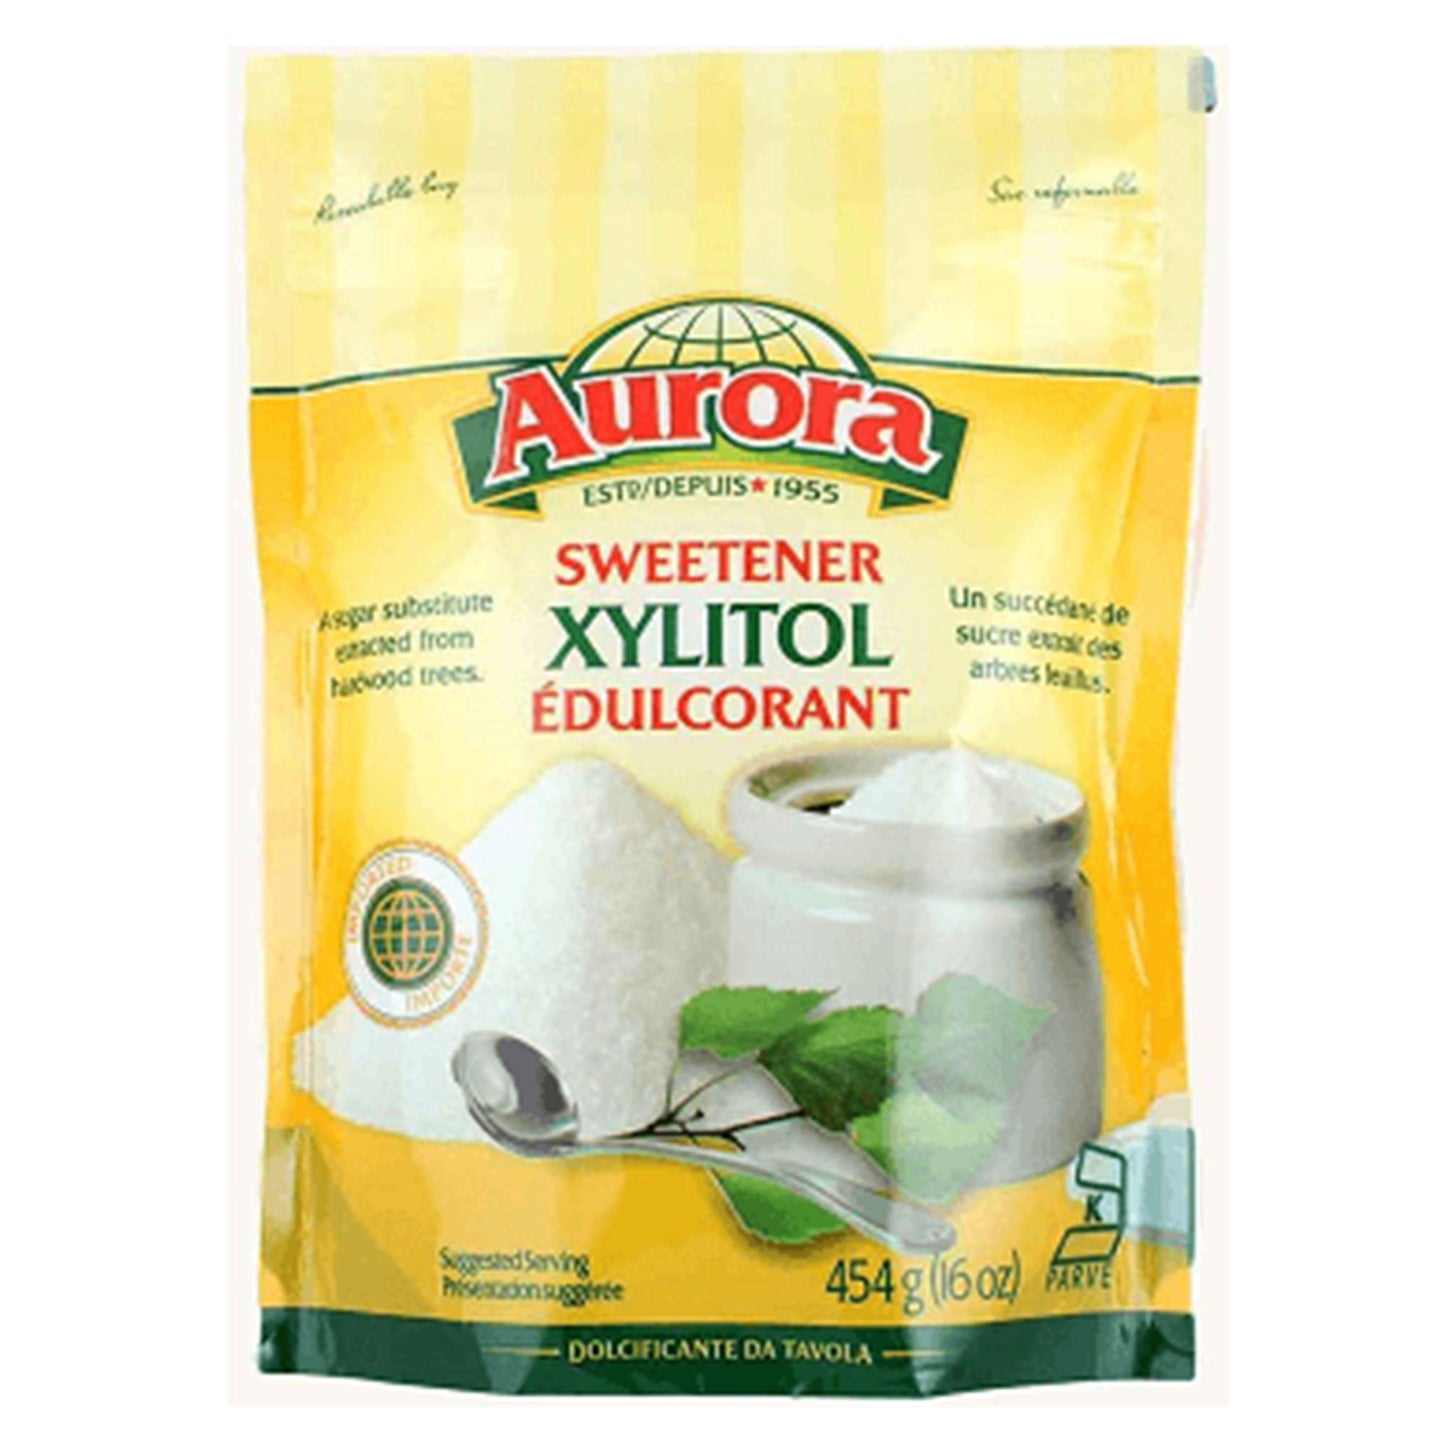 Aurora Xylitol Sweetener 454G